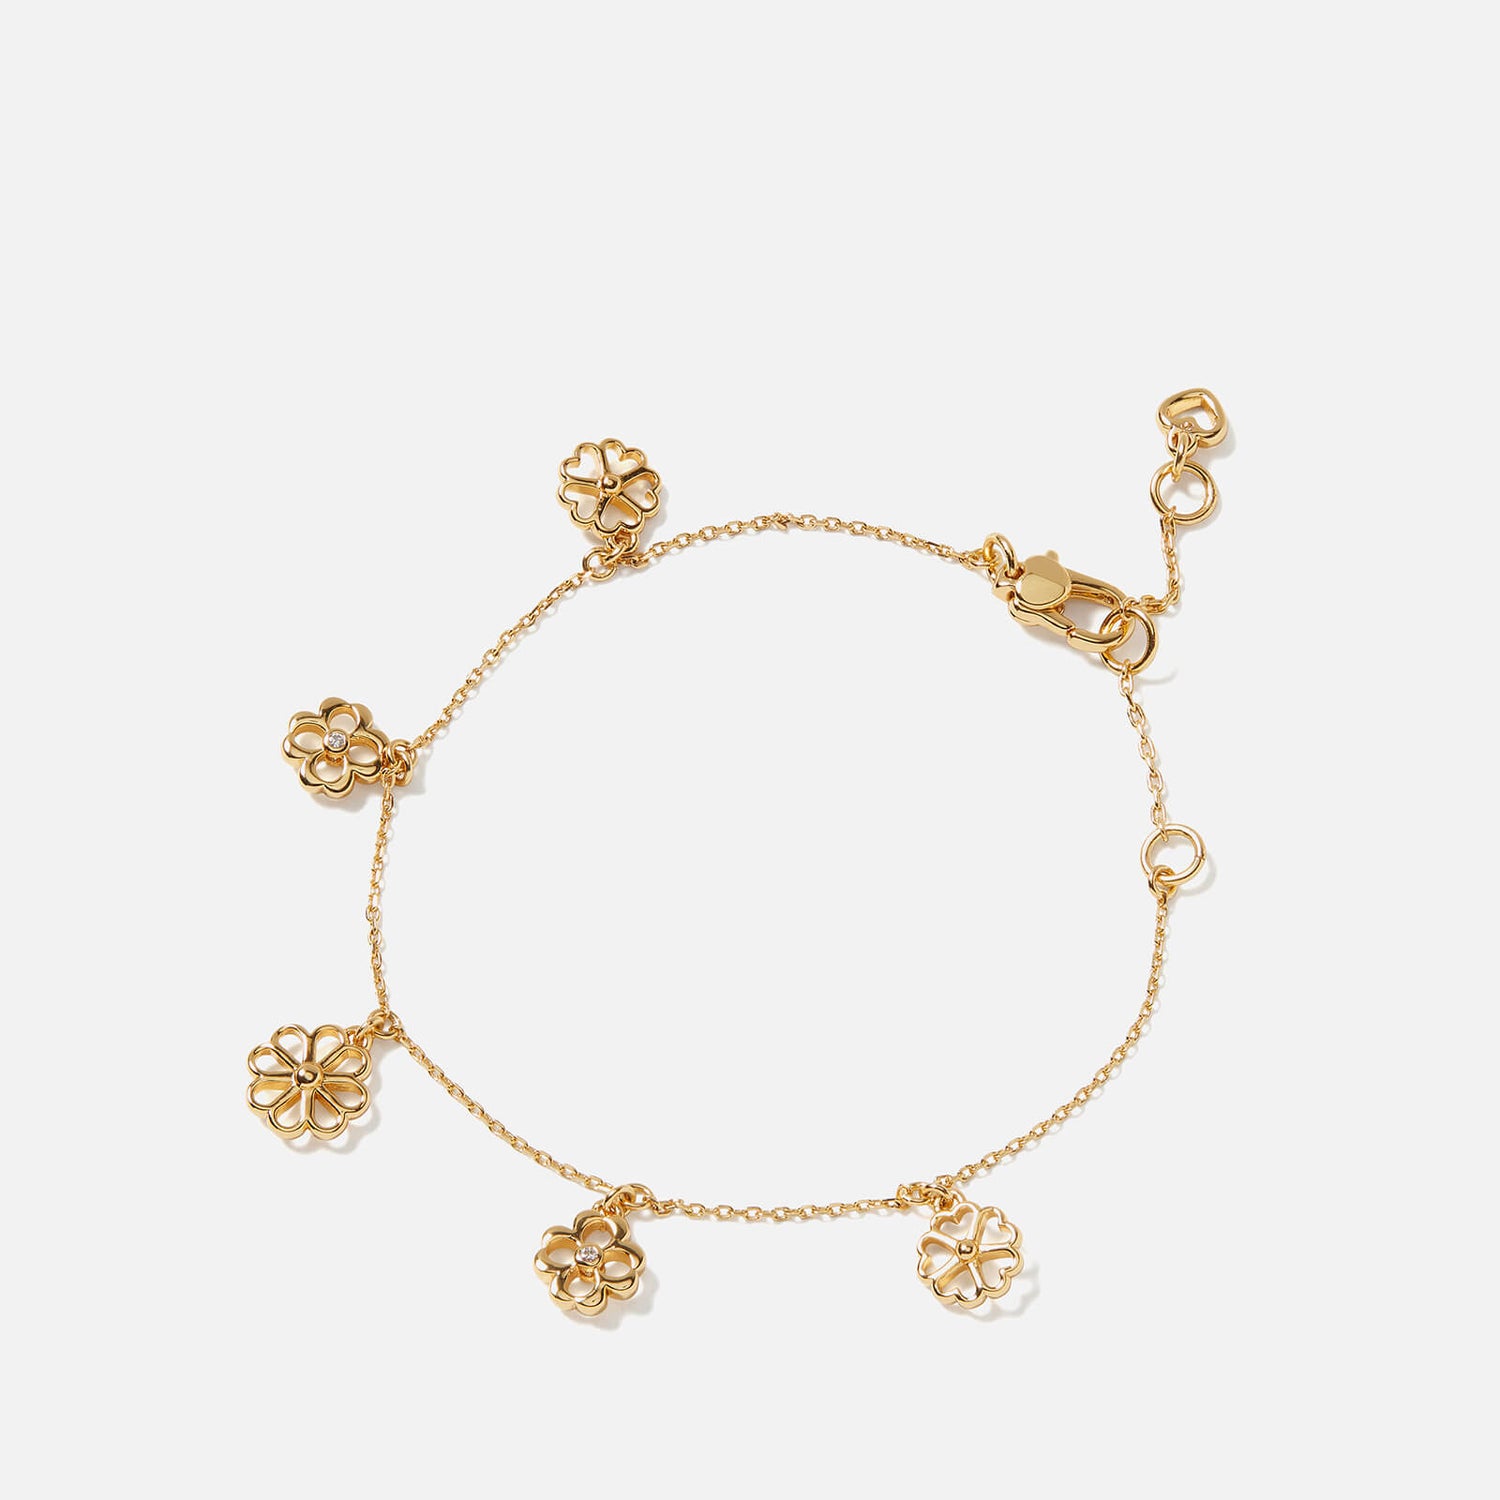 Kate Spade New York Women's Spade Floral Charm Bracelet - Clear/Gold